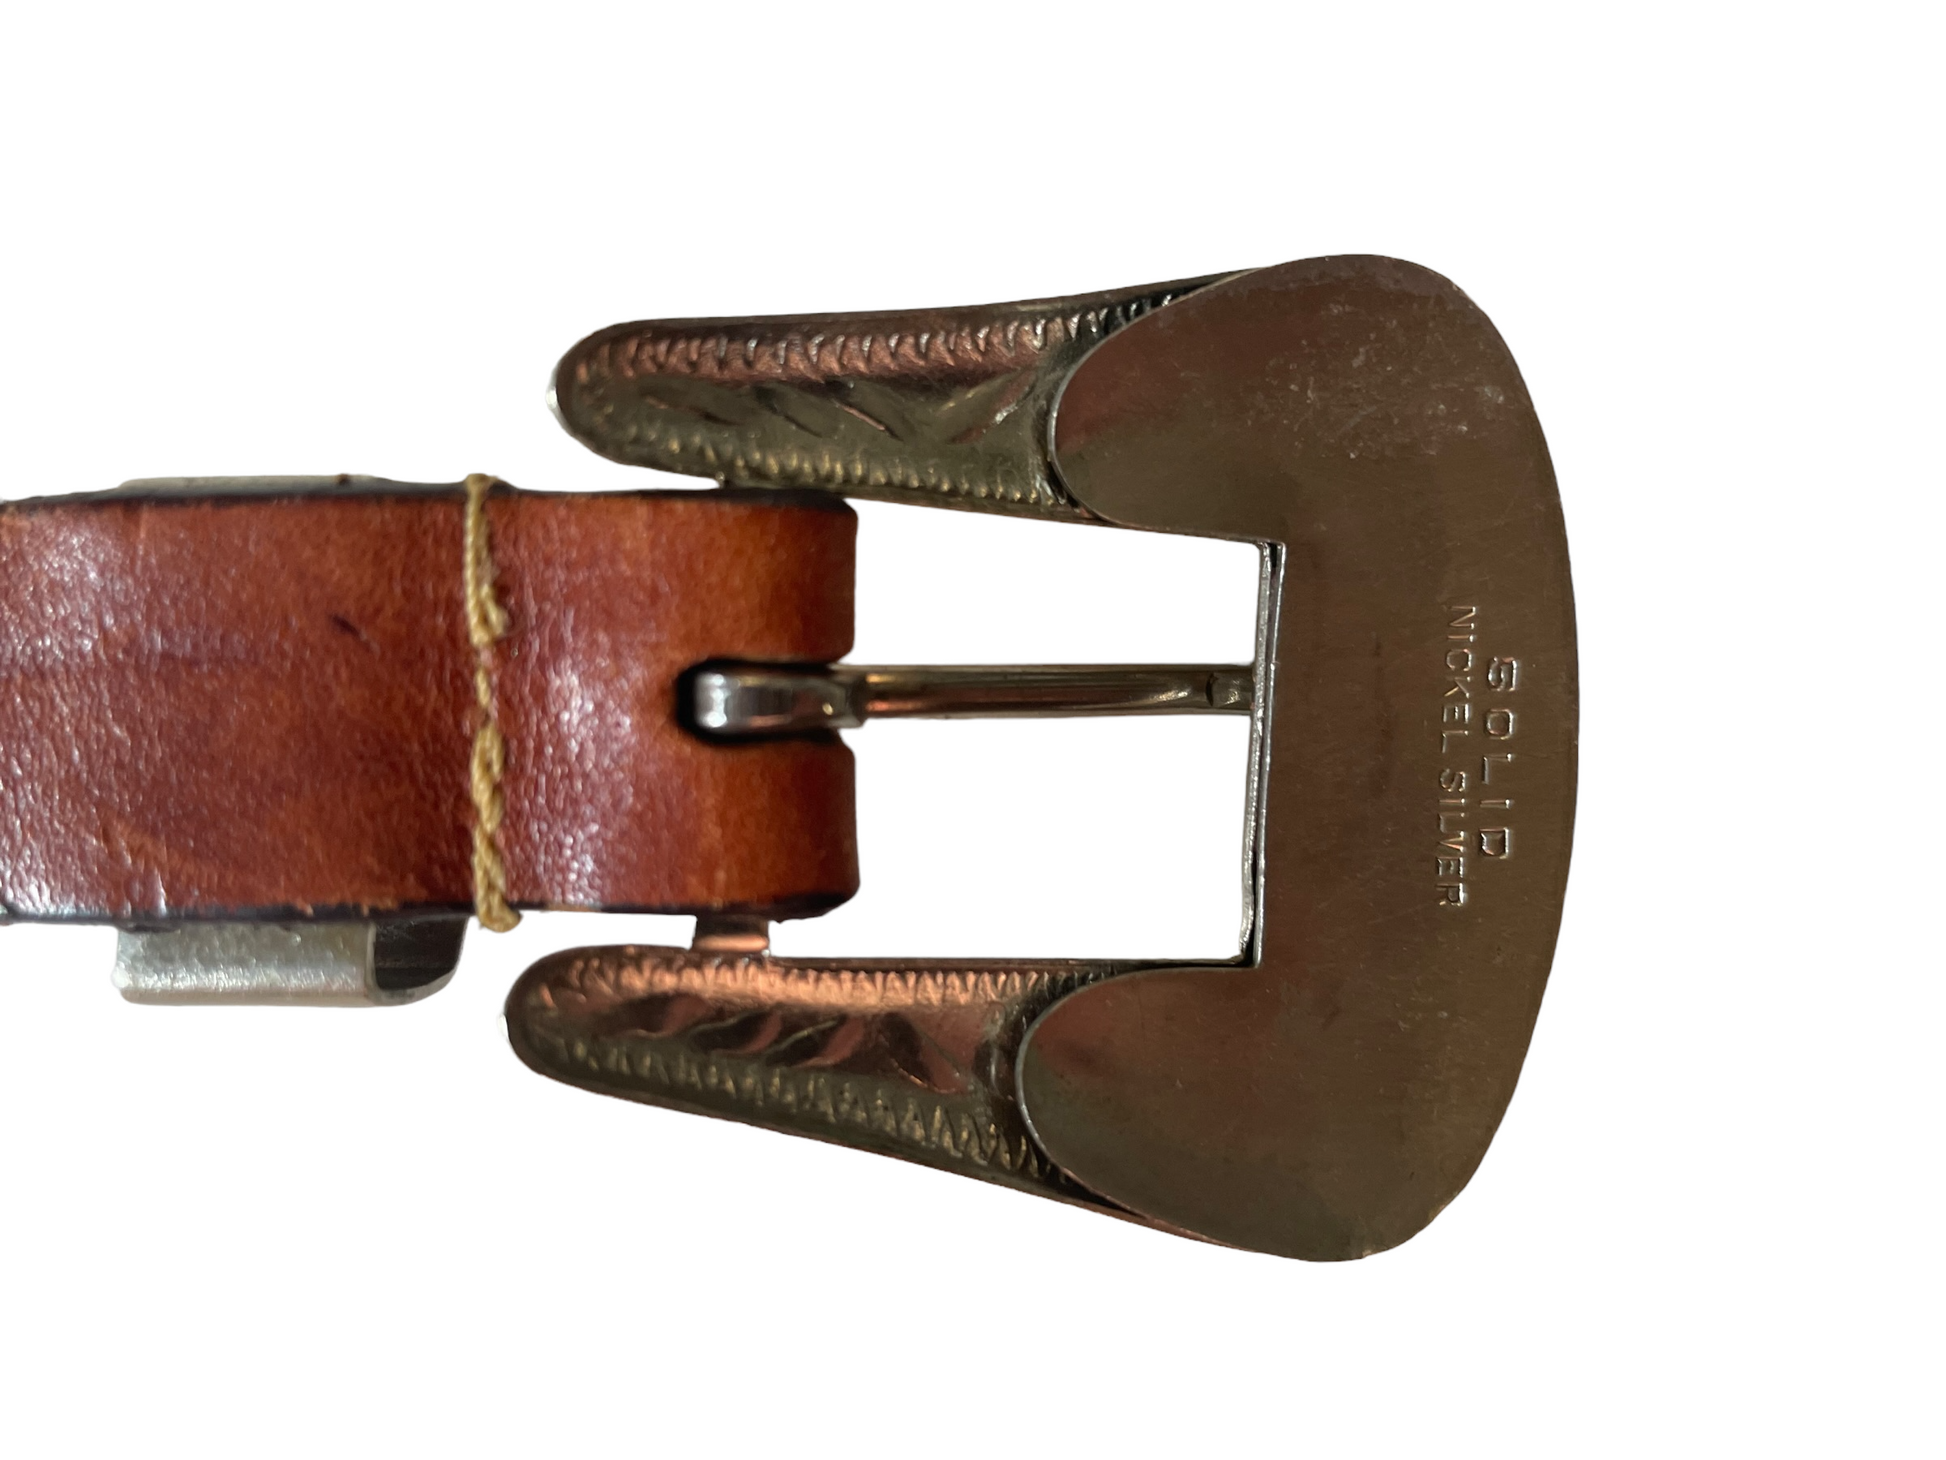 Vintage Leather Belt with Western Buckle Backside of buckle.